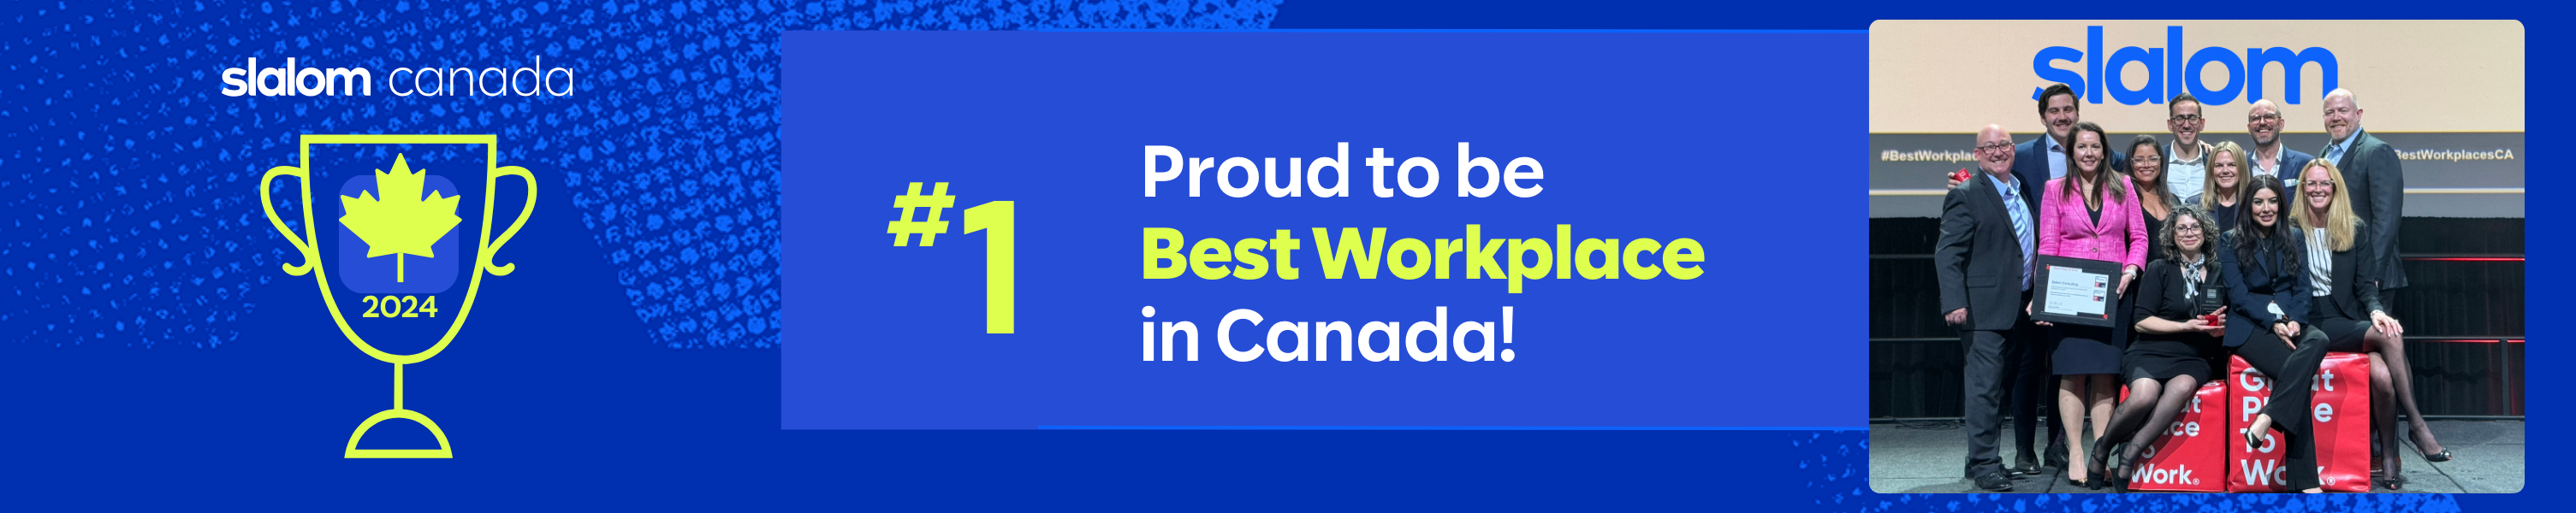 Best Workplace in Canada 2024 (1920 x 1080 px) (3010 x 600 px) - SUSIE FAV W/ PIC